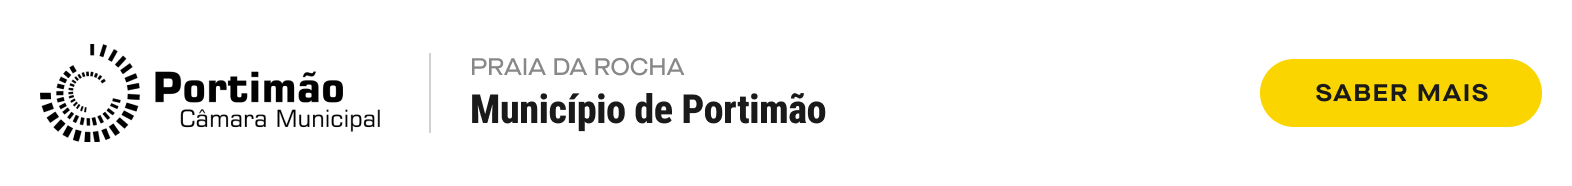 99.Desktop Municipio De Portimao Praia Da Rocha Marina (1)